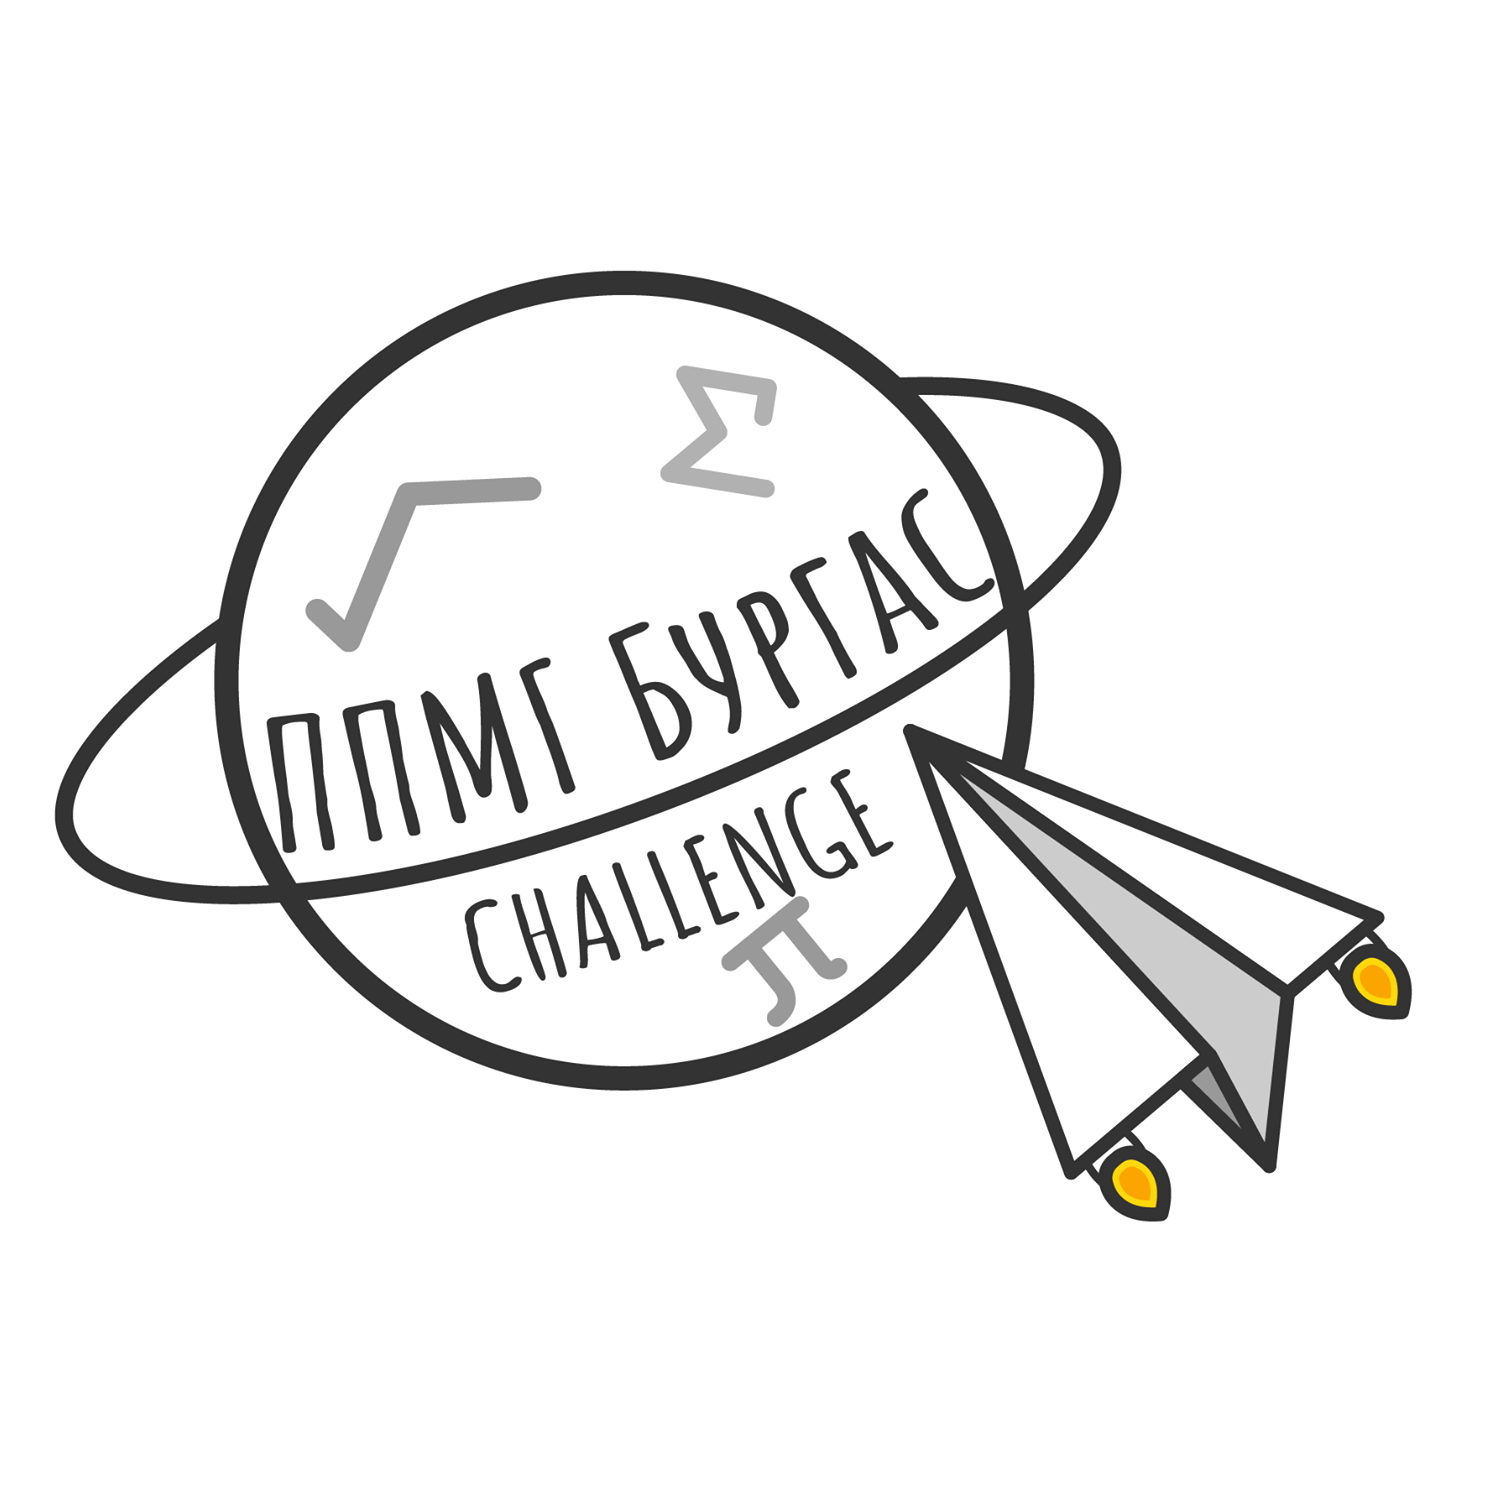 PPMG Burgas Challenge logo